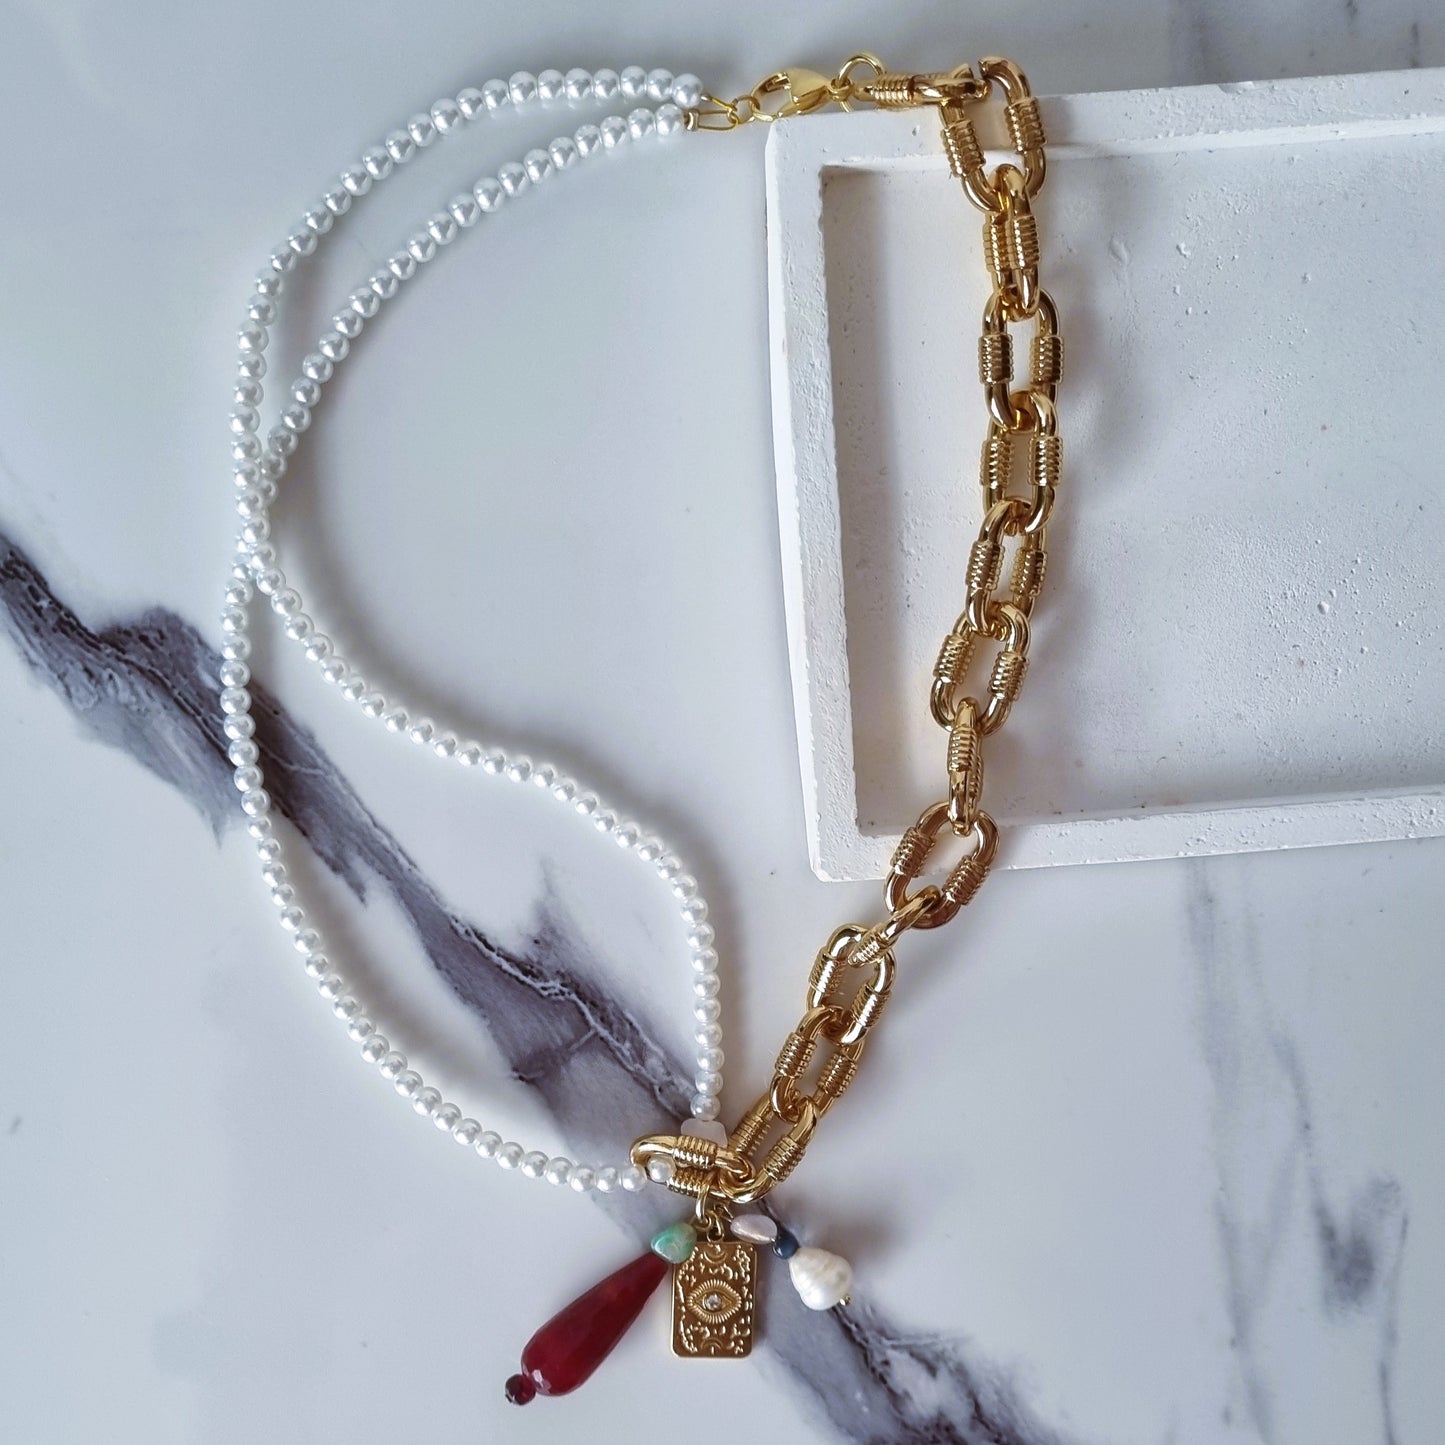 Half pearl / half chain necklace